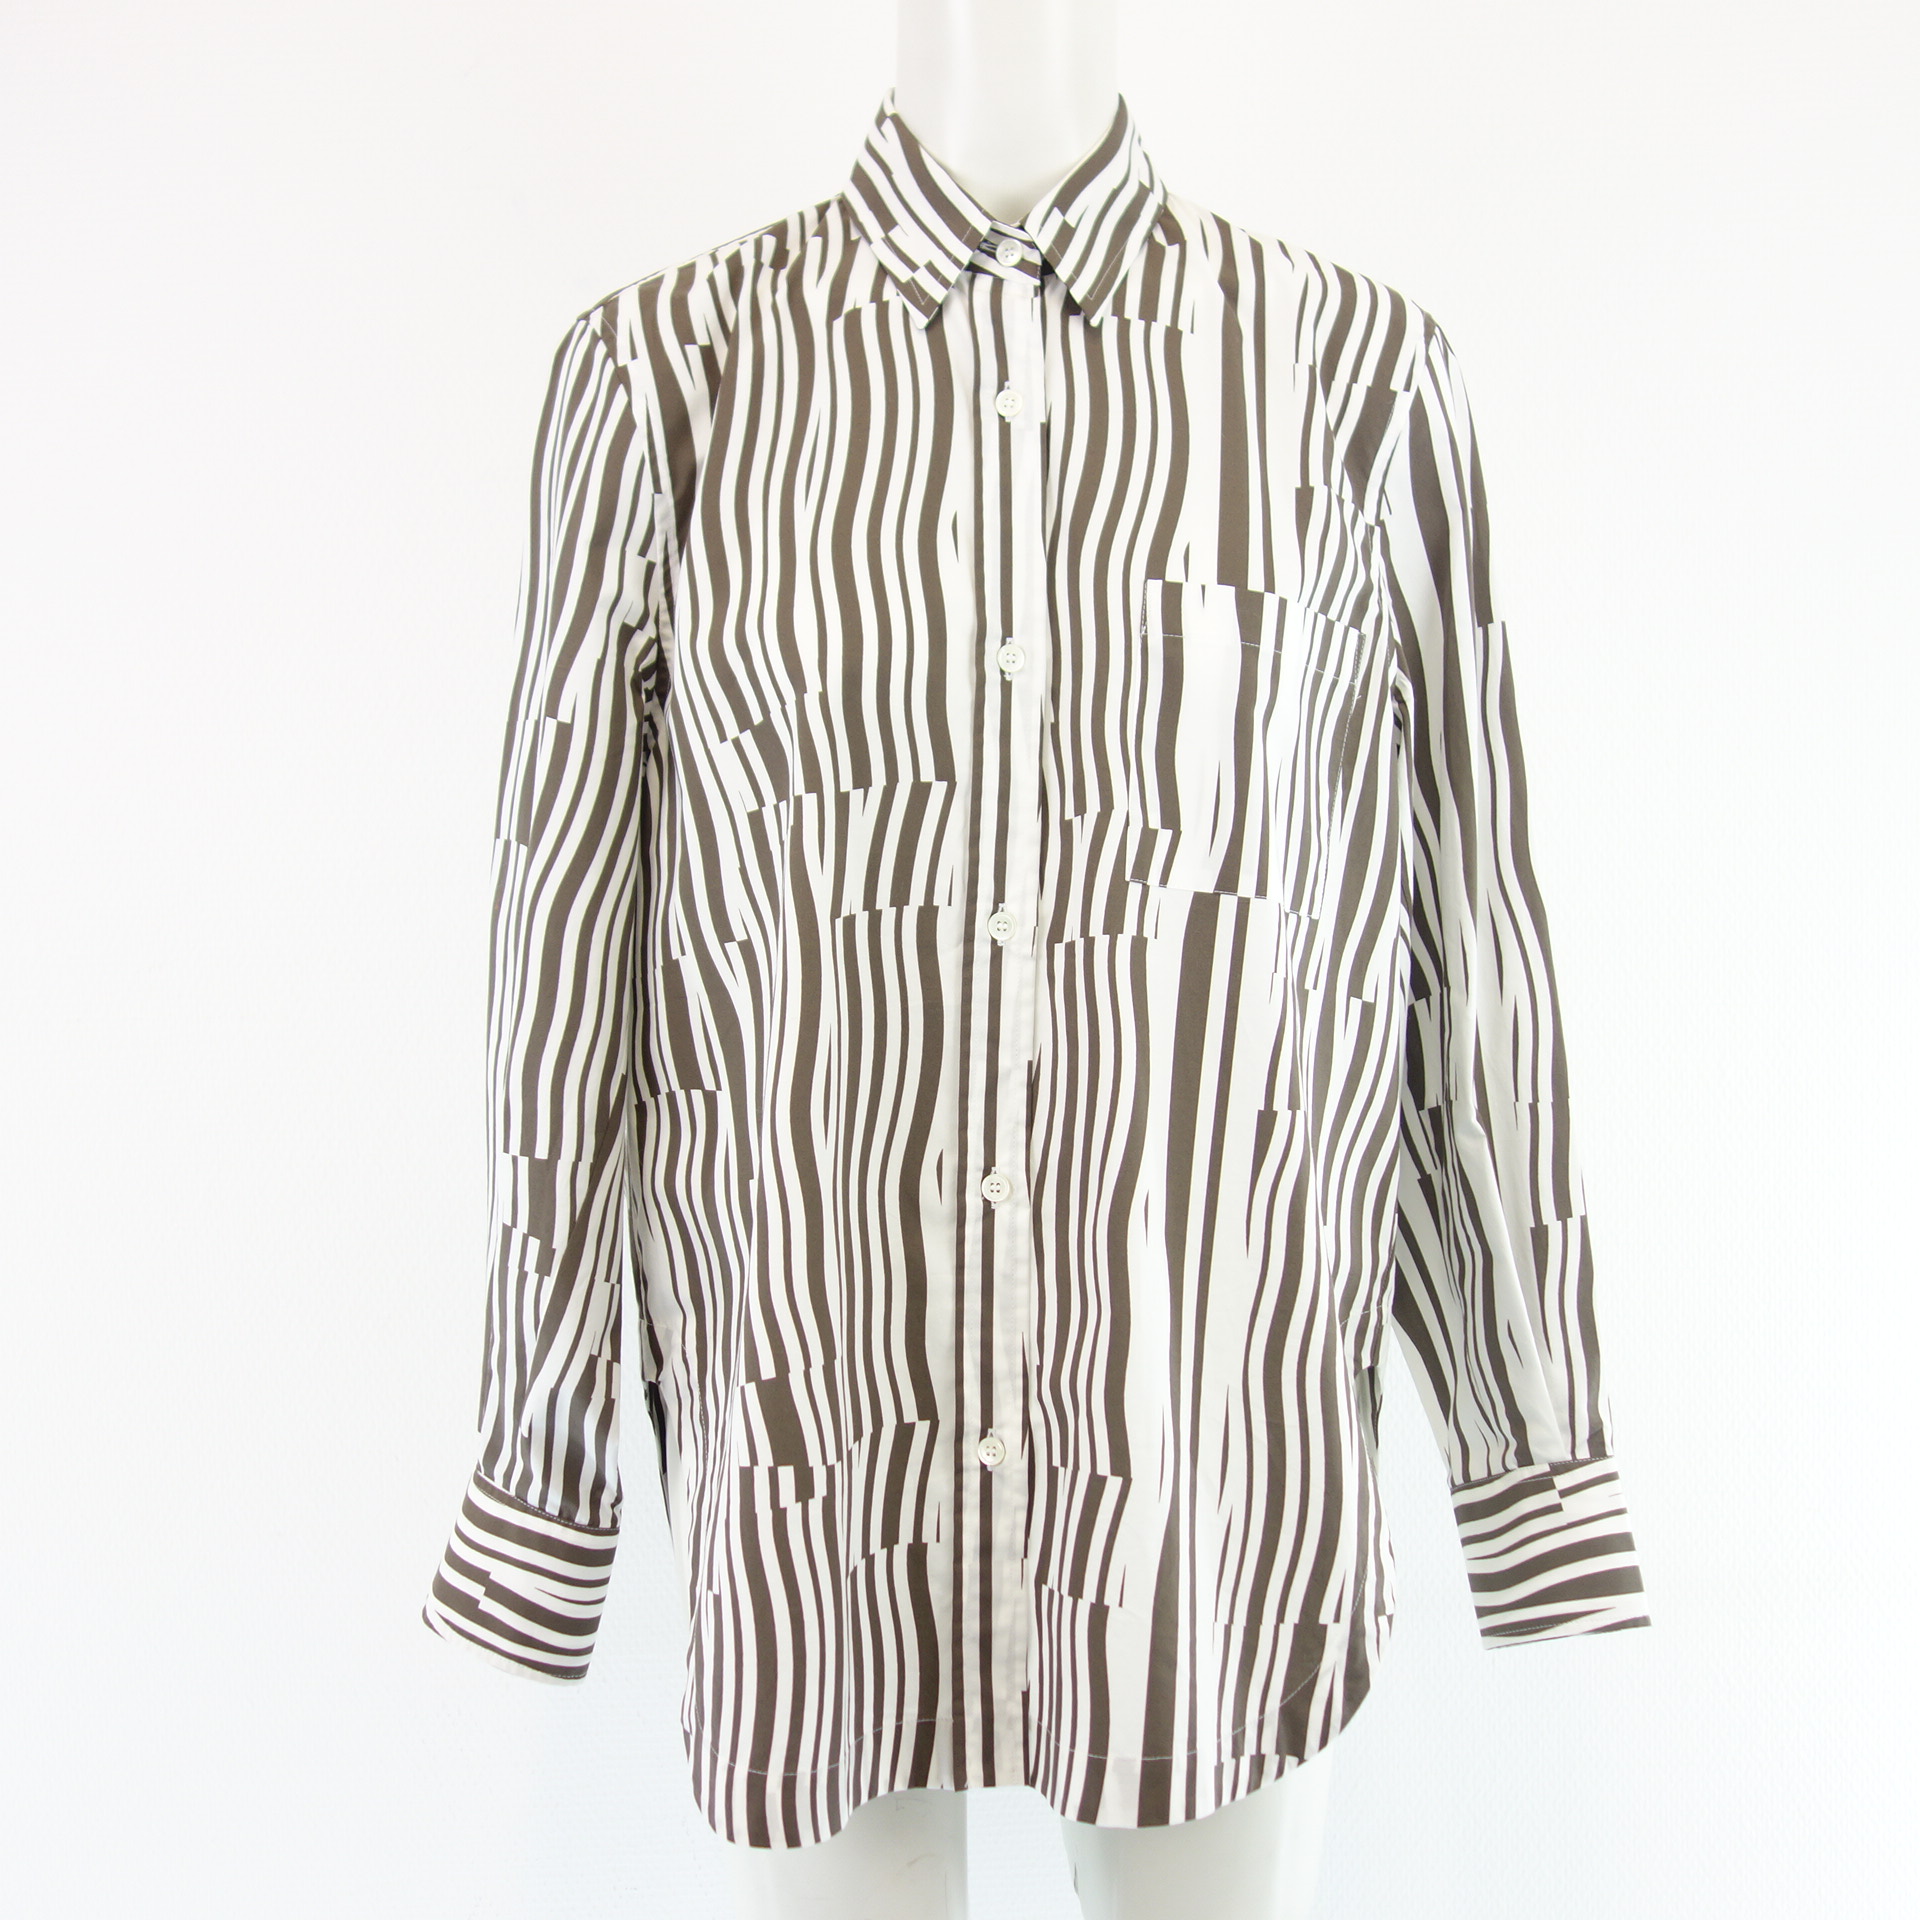 CALIBAN Damen Hemd Bluse Tunika Oberteil Shirt Weiß Braun Oversize Baumwolle